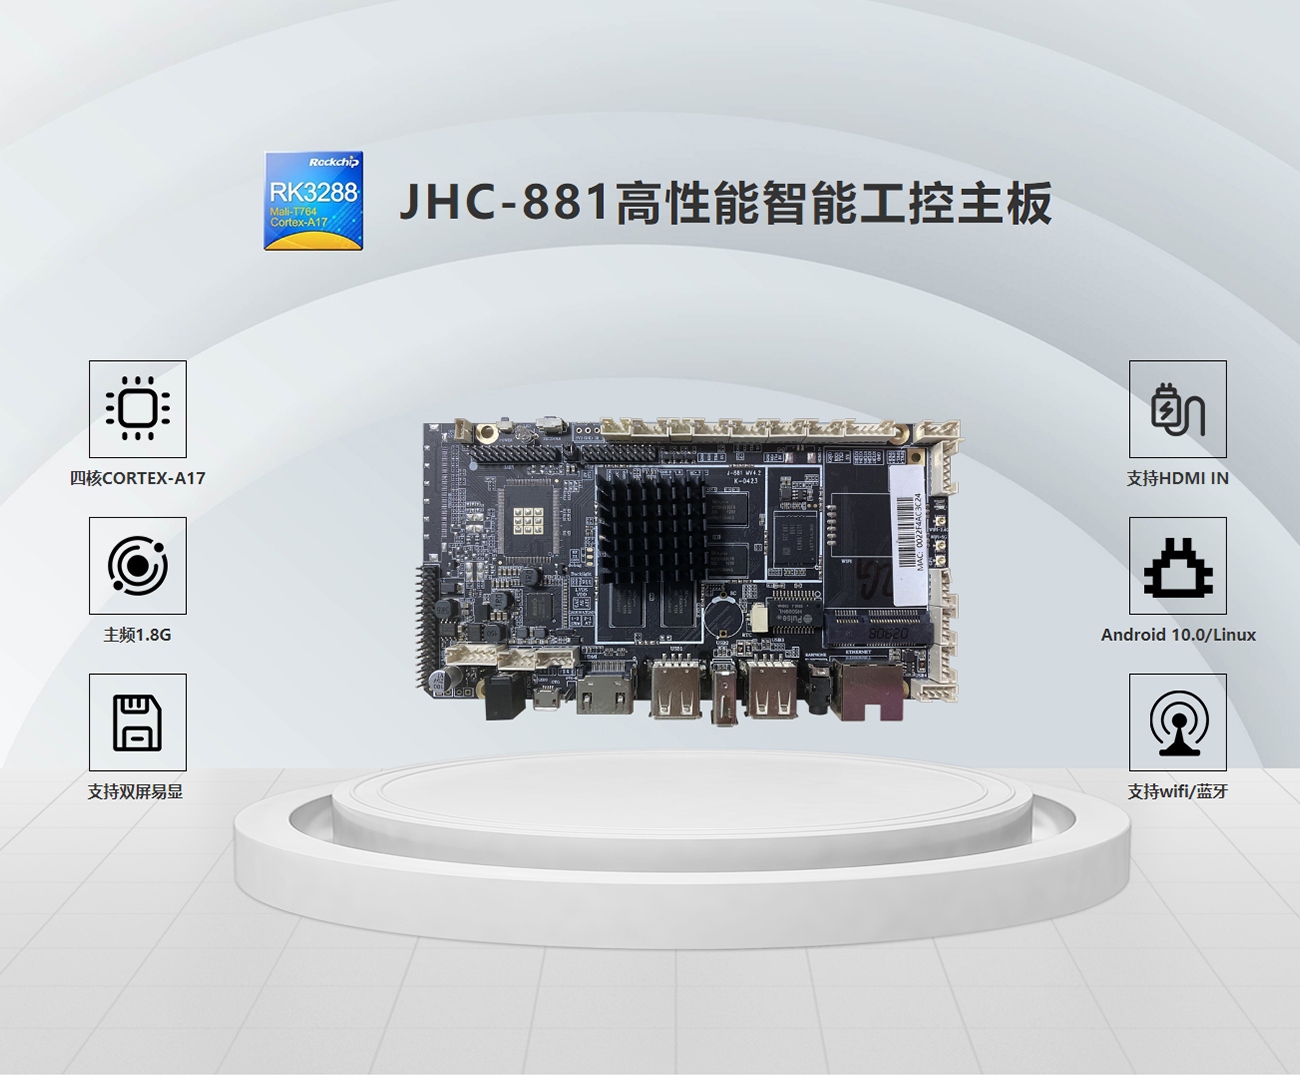 JHC-881高性能智能工控主板